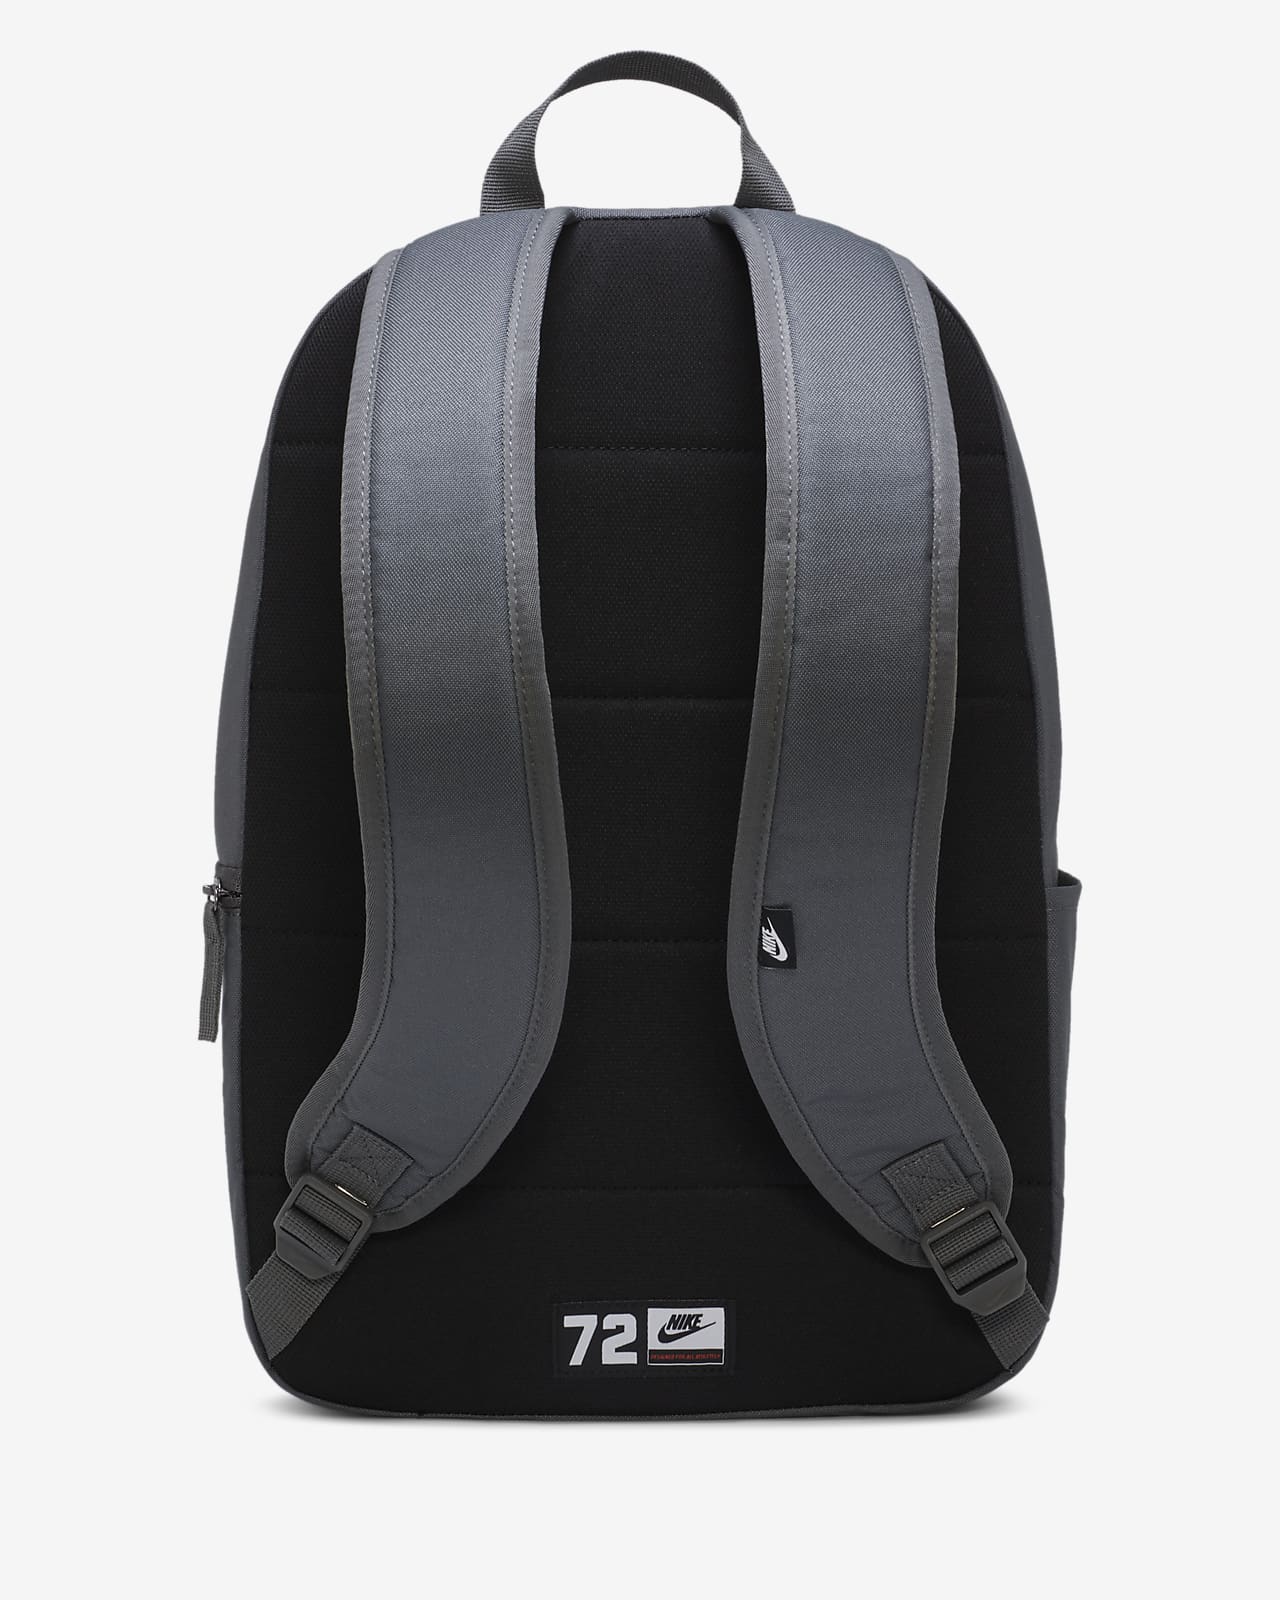 nike heritage 2.0 backpack grey